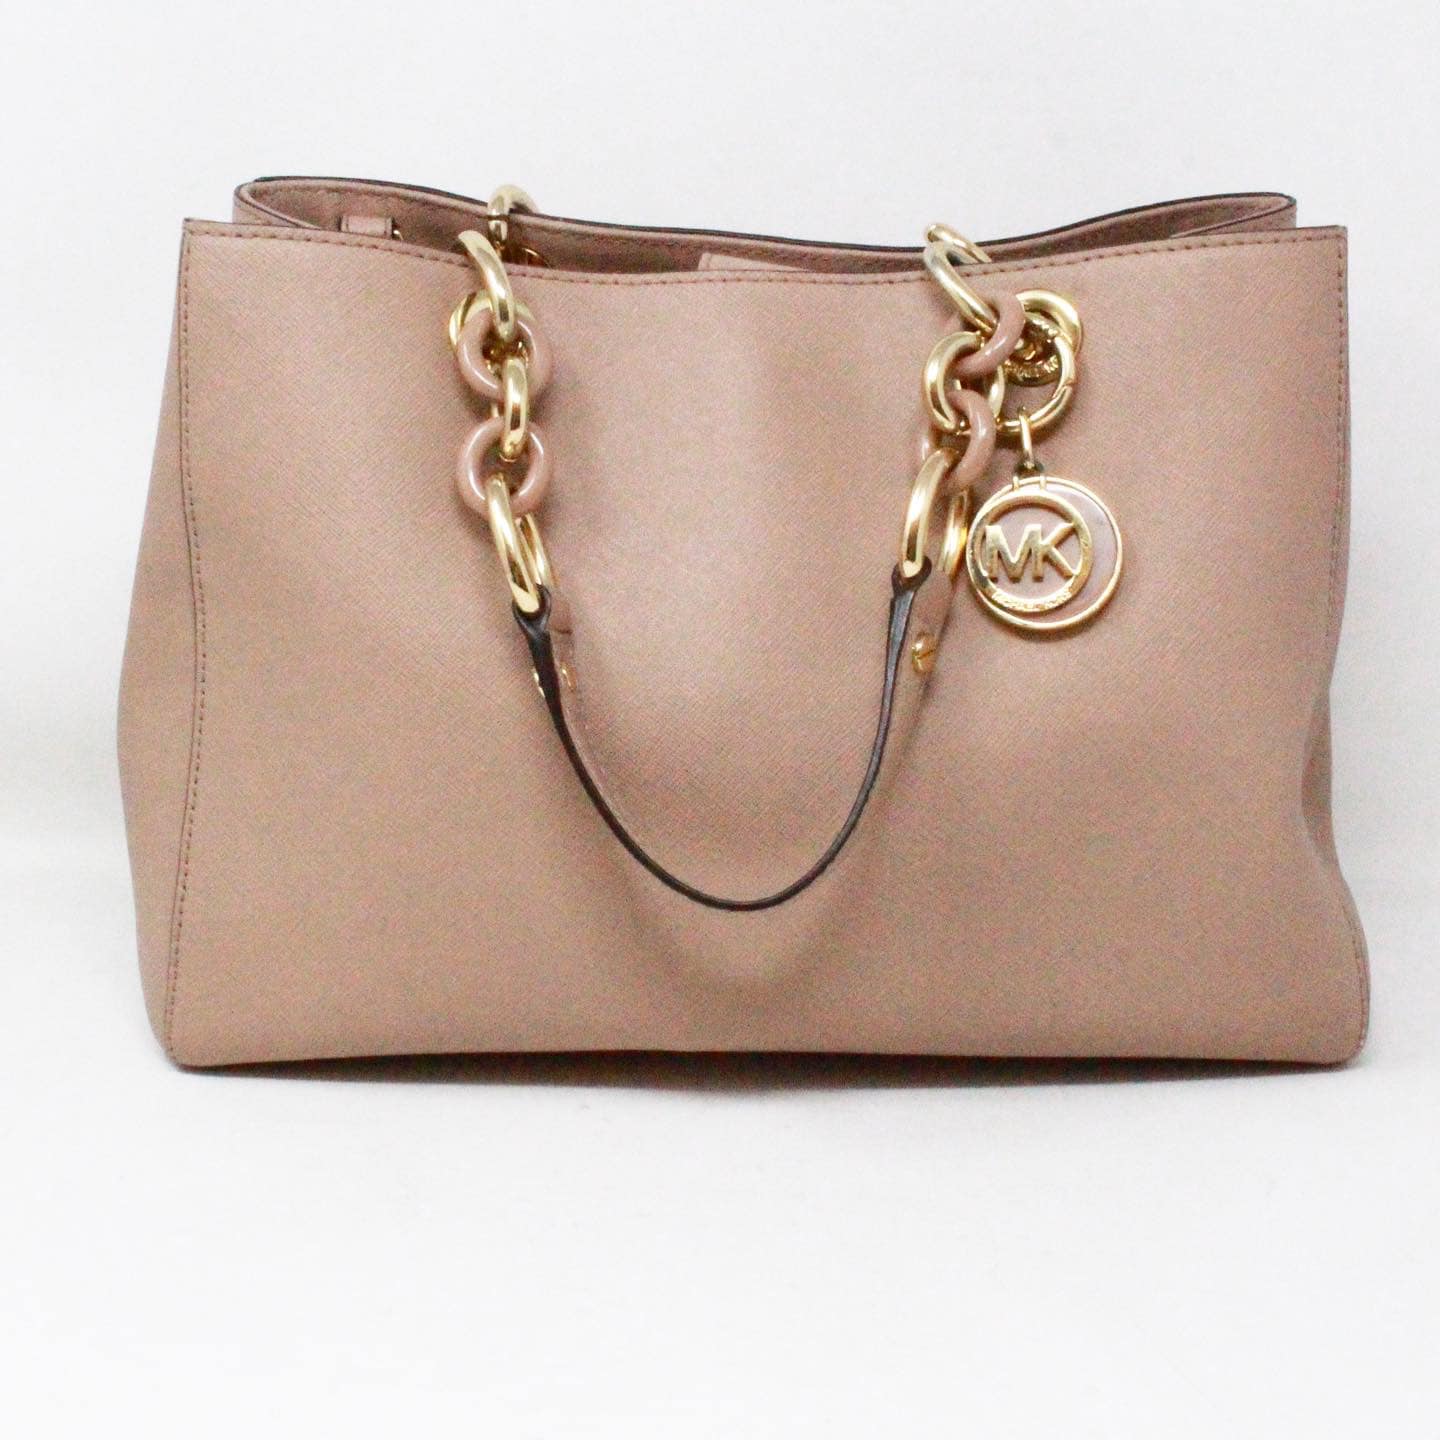 MICHAEL KORS #43025 Pink Rosewood Leather Handbag 1